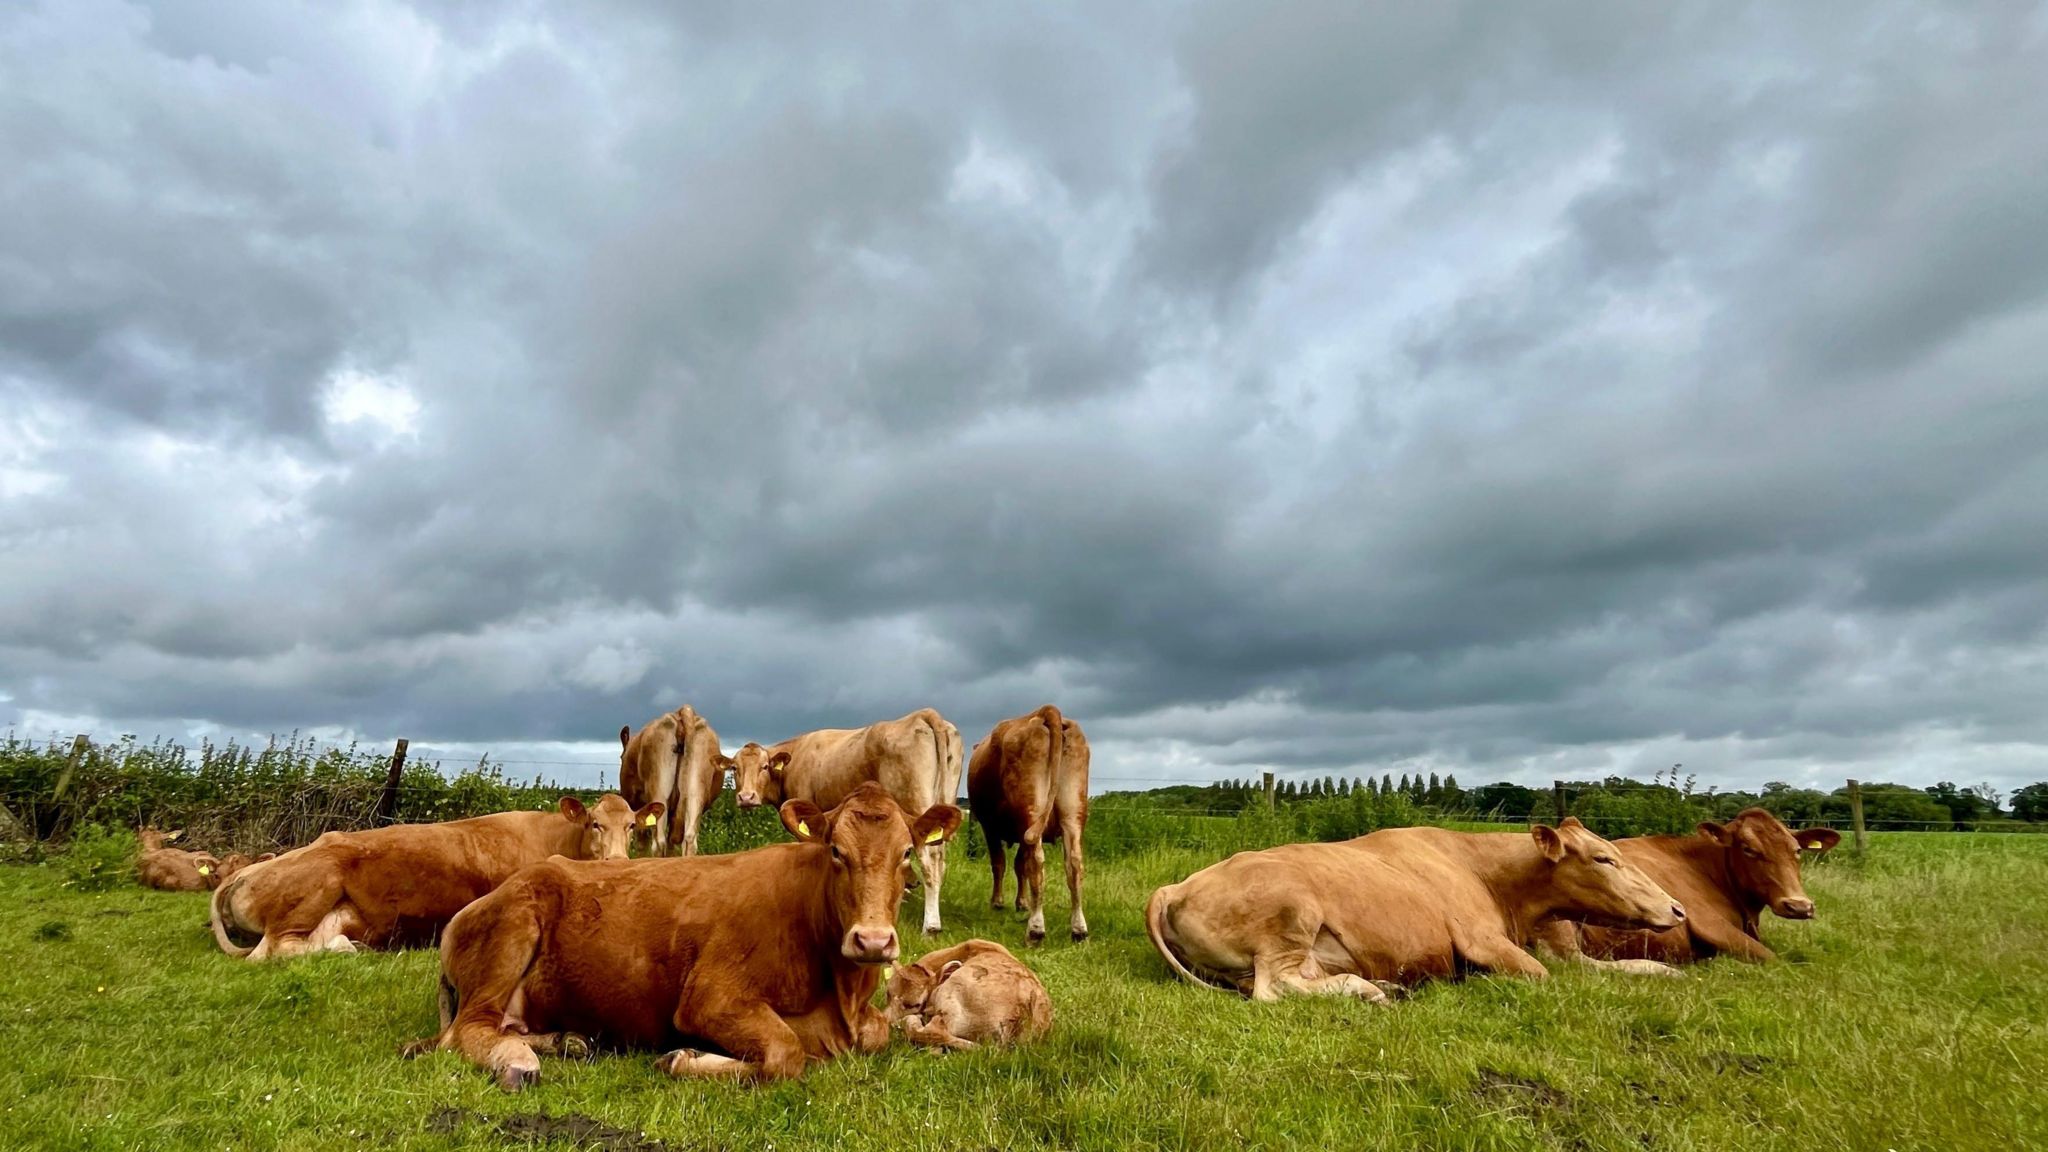 TUESDAY - Cows lying in a field under a grey sky inFaringdon